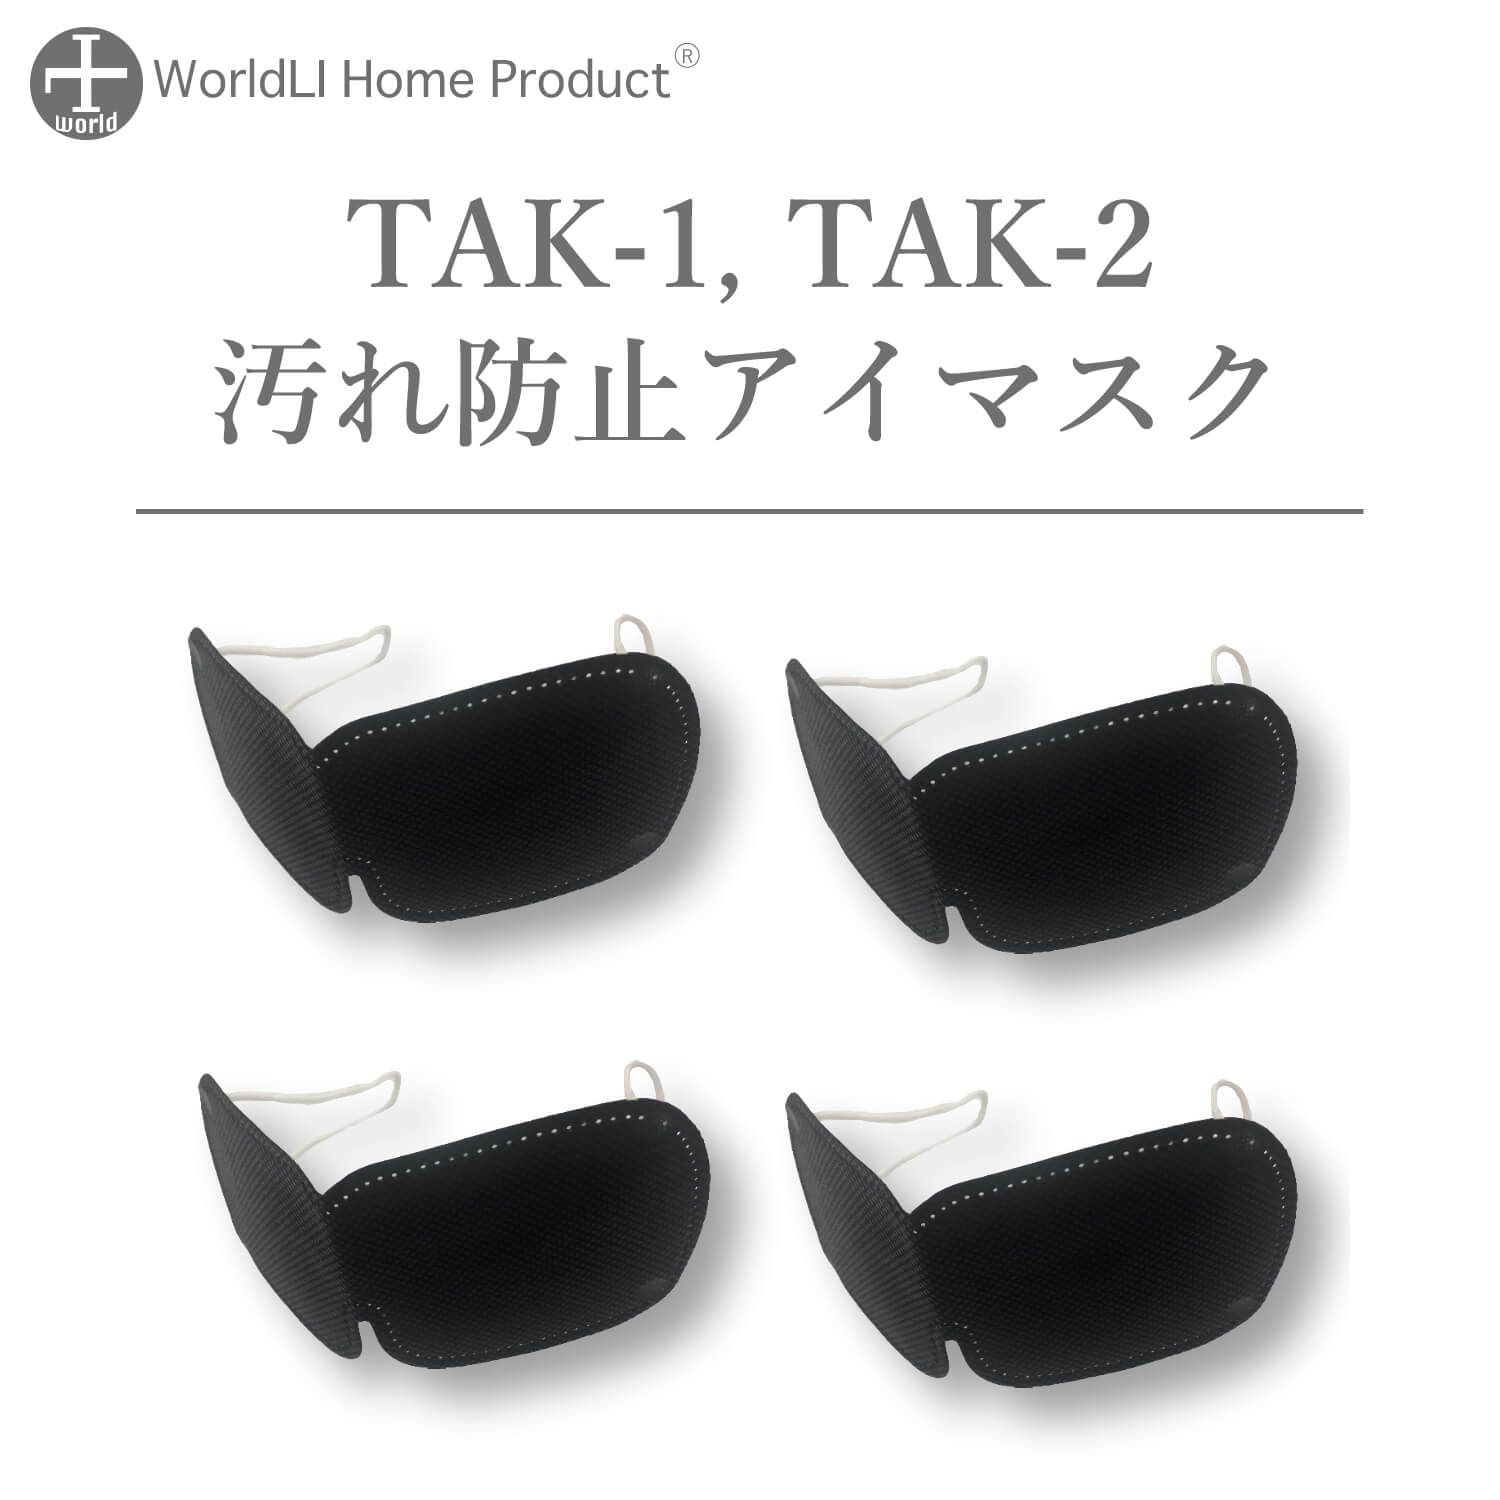 TAK-1 TAK-2用アイマスク 在庫処分大特価 不織布 アイマスク 4枚入り 使い捨て ブラック 目元マッサージャーカバー対応 LIworld 【お年玉セール特価】 Home WorldLI Product